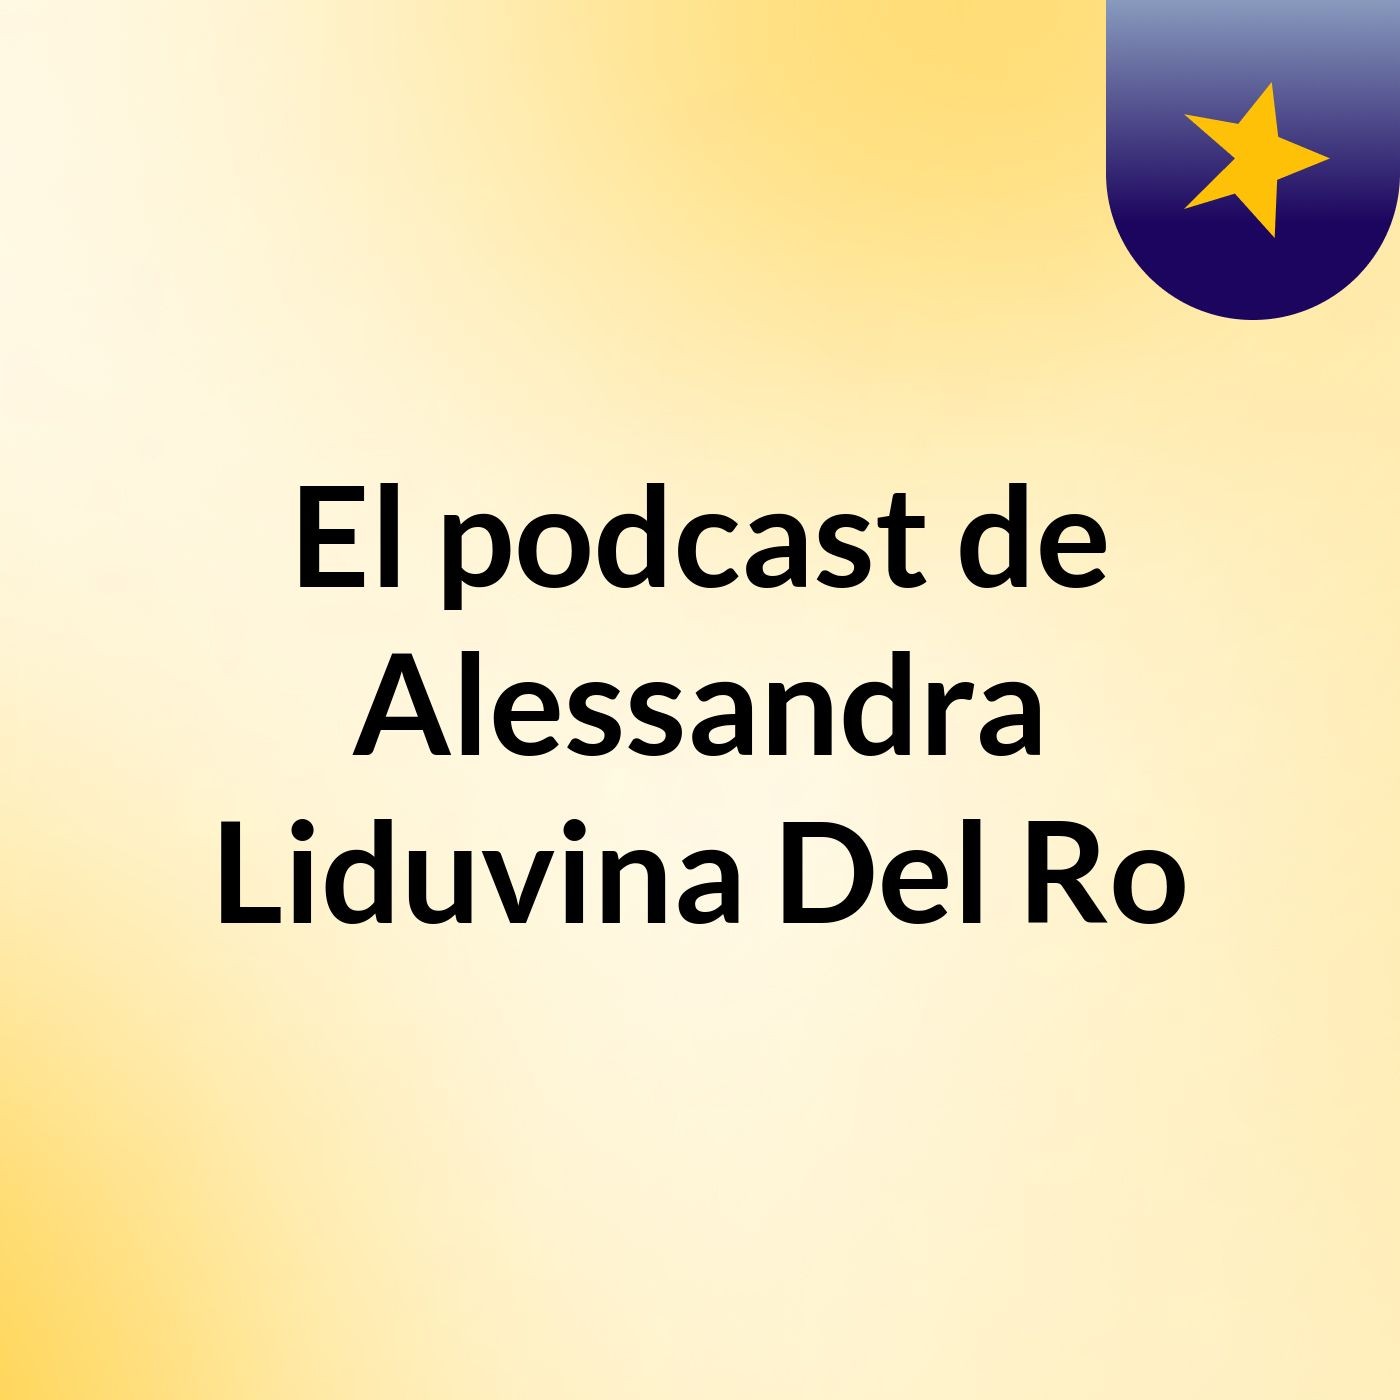 Episodio 2 - El podcast de Alessandra Liduvina Del Ro